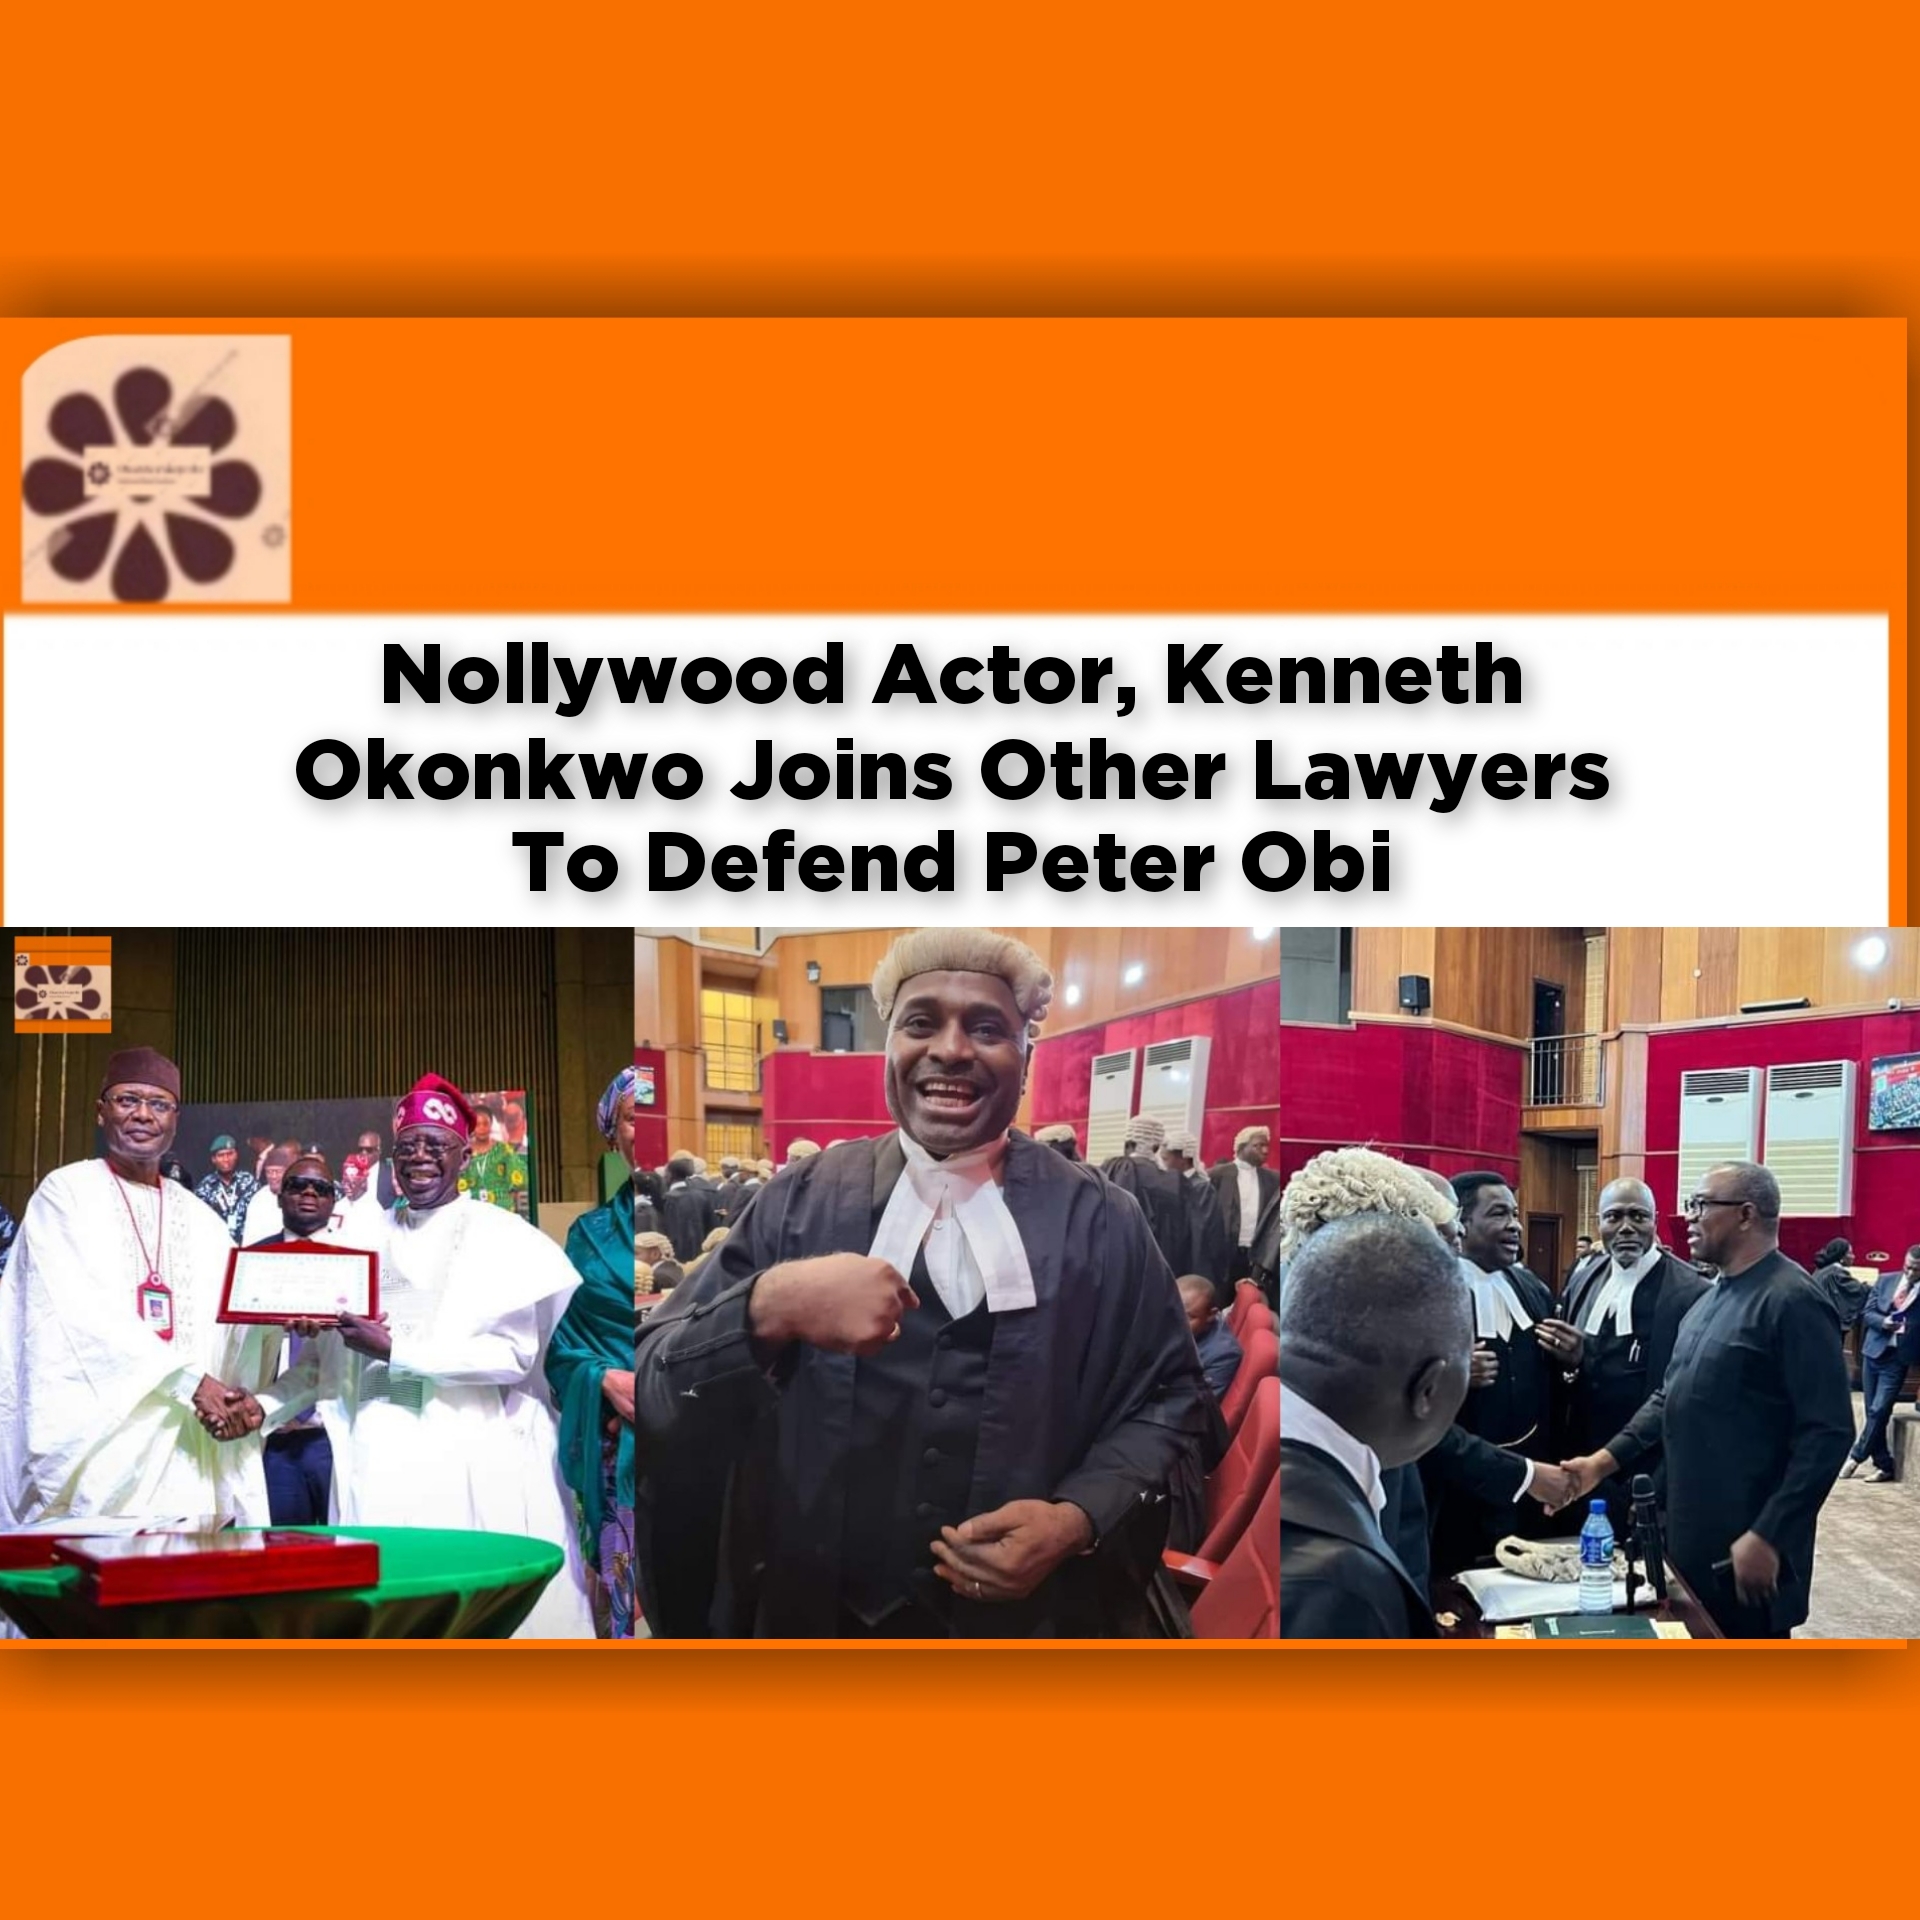 Nollywood Actor, Kenneth Okonkwo Joins Other Lawyers To Defend Peter Obi ~ OsazuwaAkonedo ###LP #2023Election #Abubakar #Ahmed #APC #Atiku #Bola #Kenneth #lawyers #Nollywood #Obi #Okonkwo #OsazuwaAkonedo #PDP #PEPT #Peter #politics #Tinubu #Tribunal